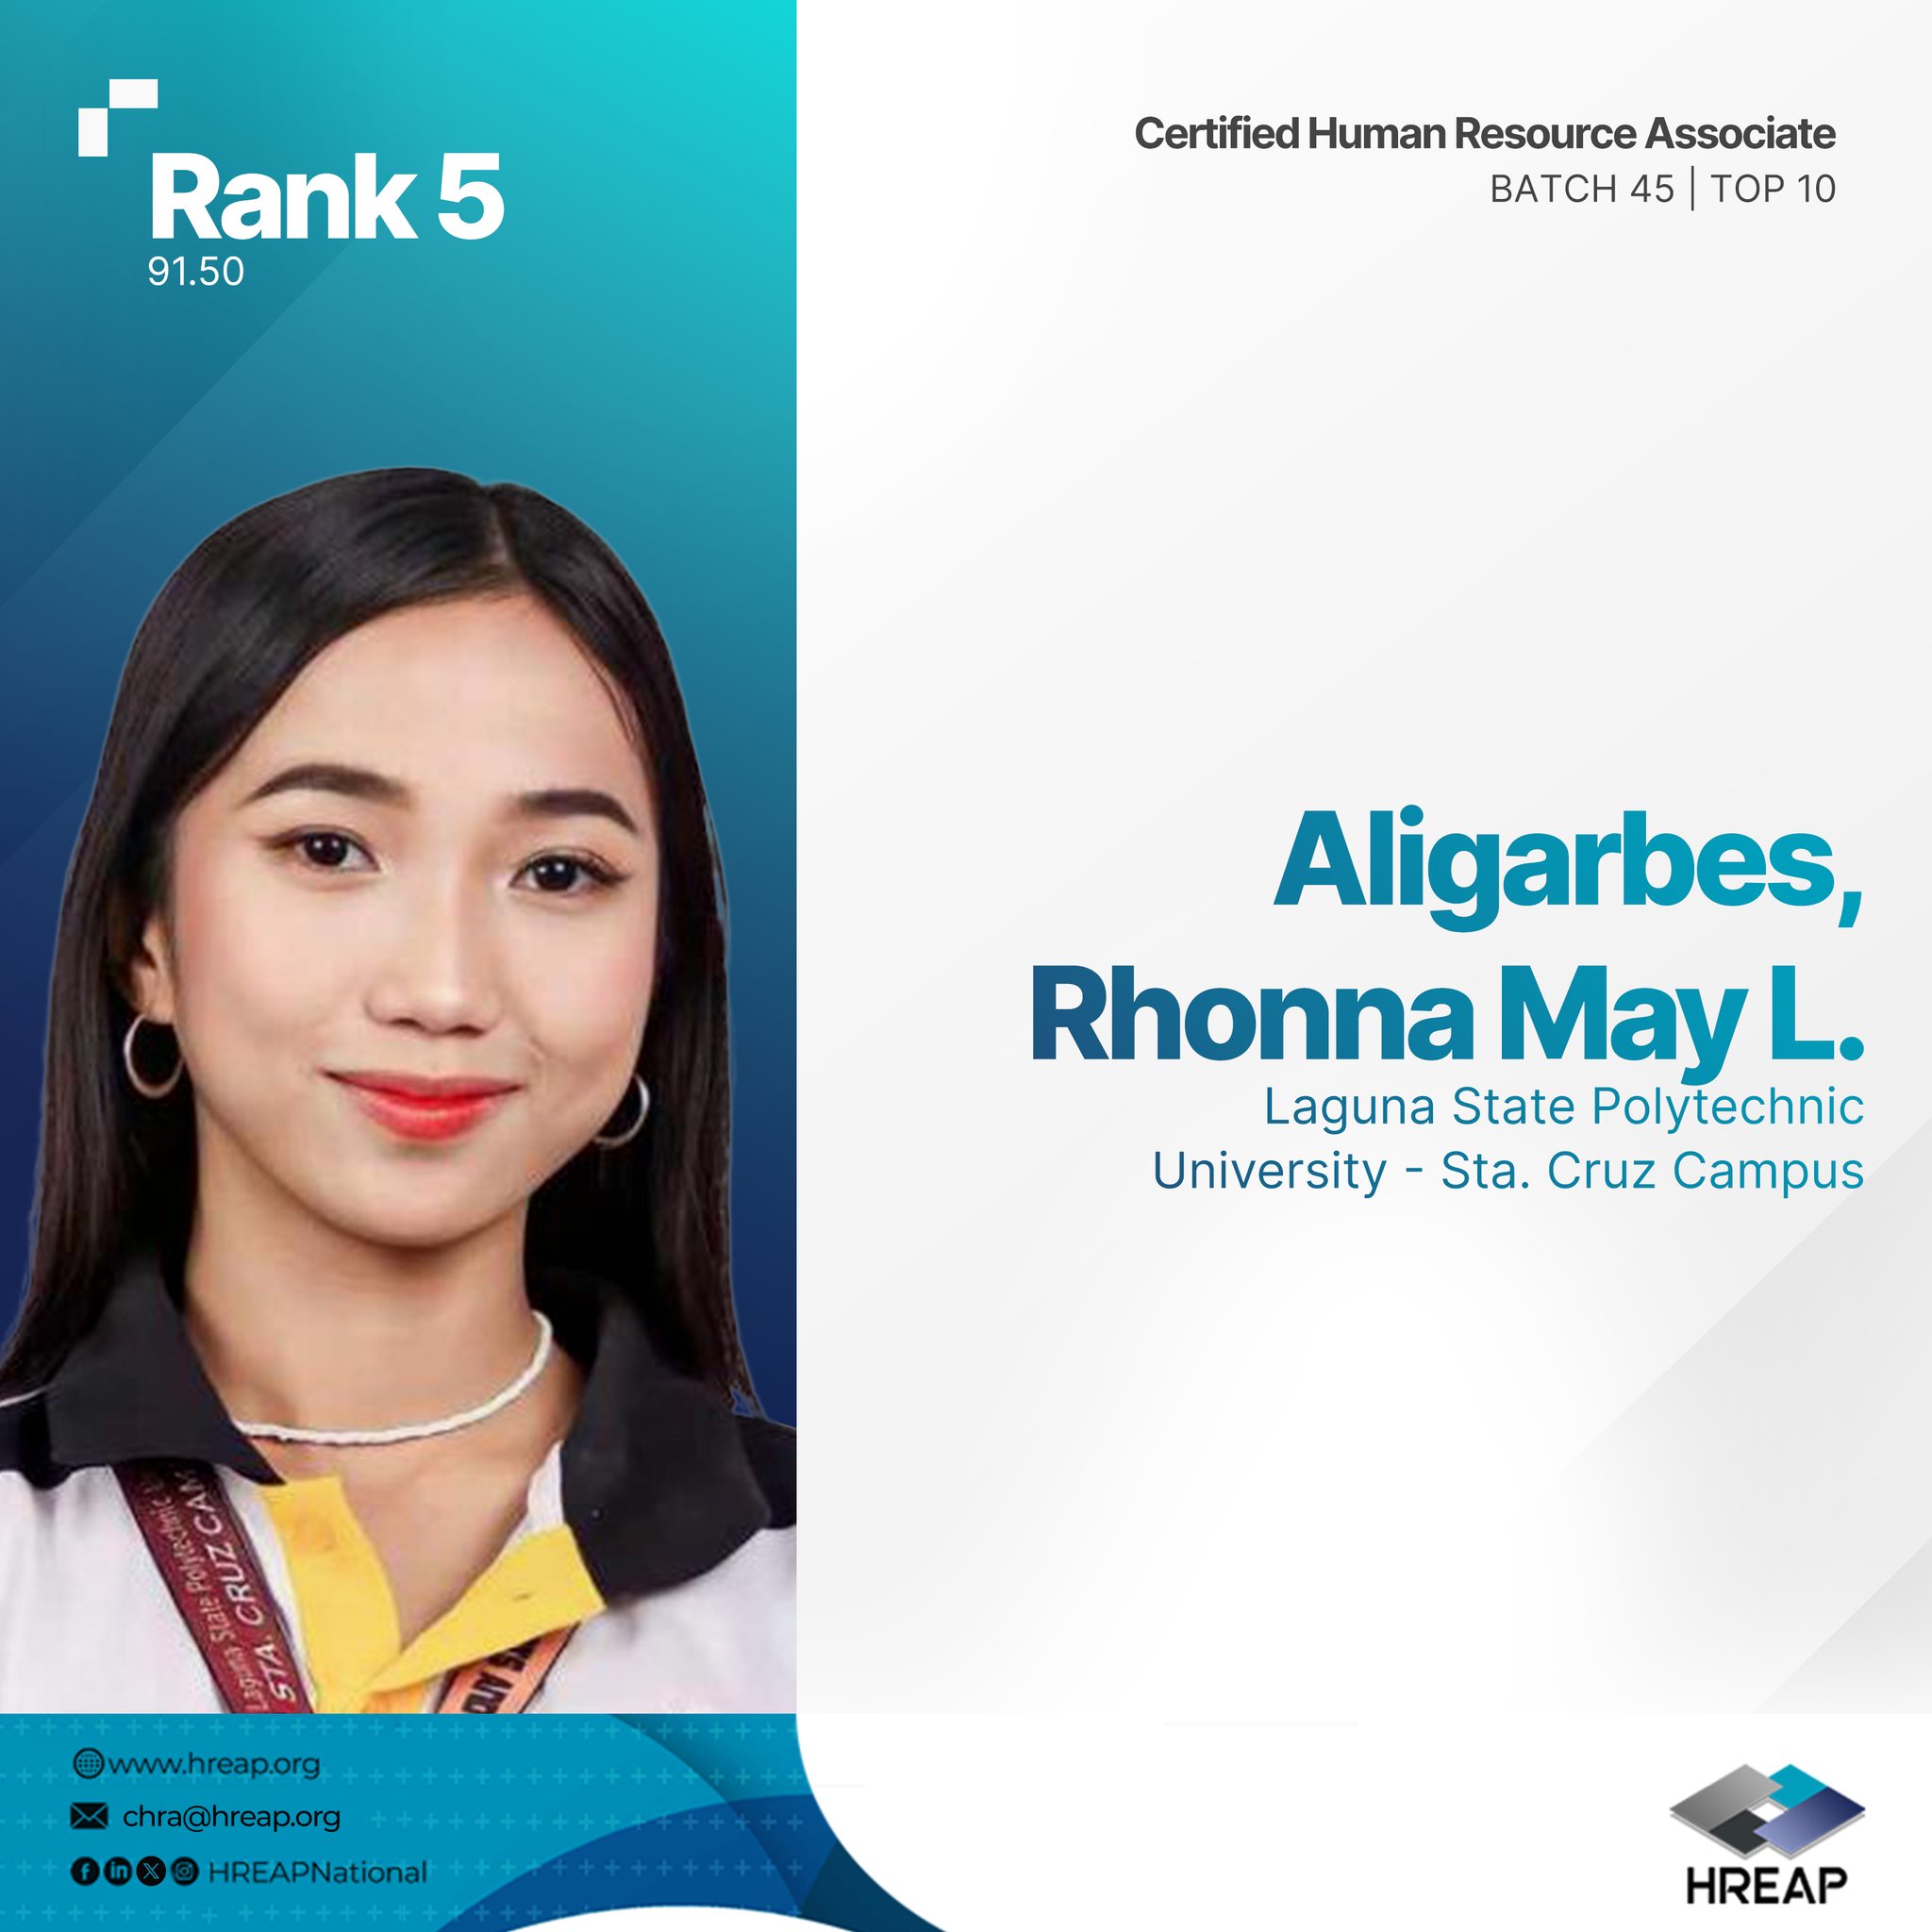 Congratulations Rhonna May L. Aligarbes !